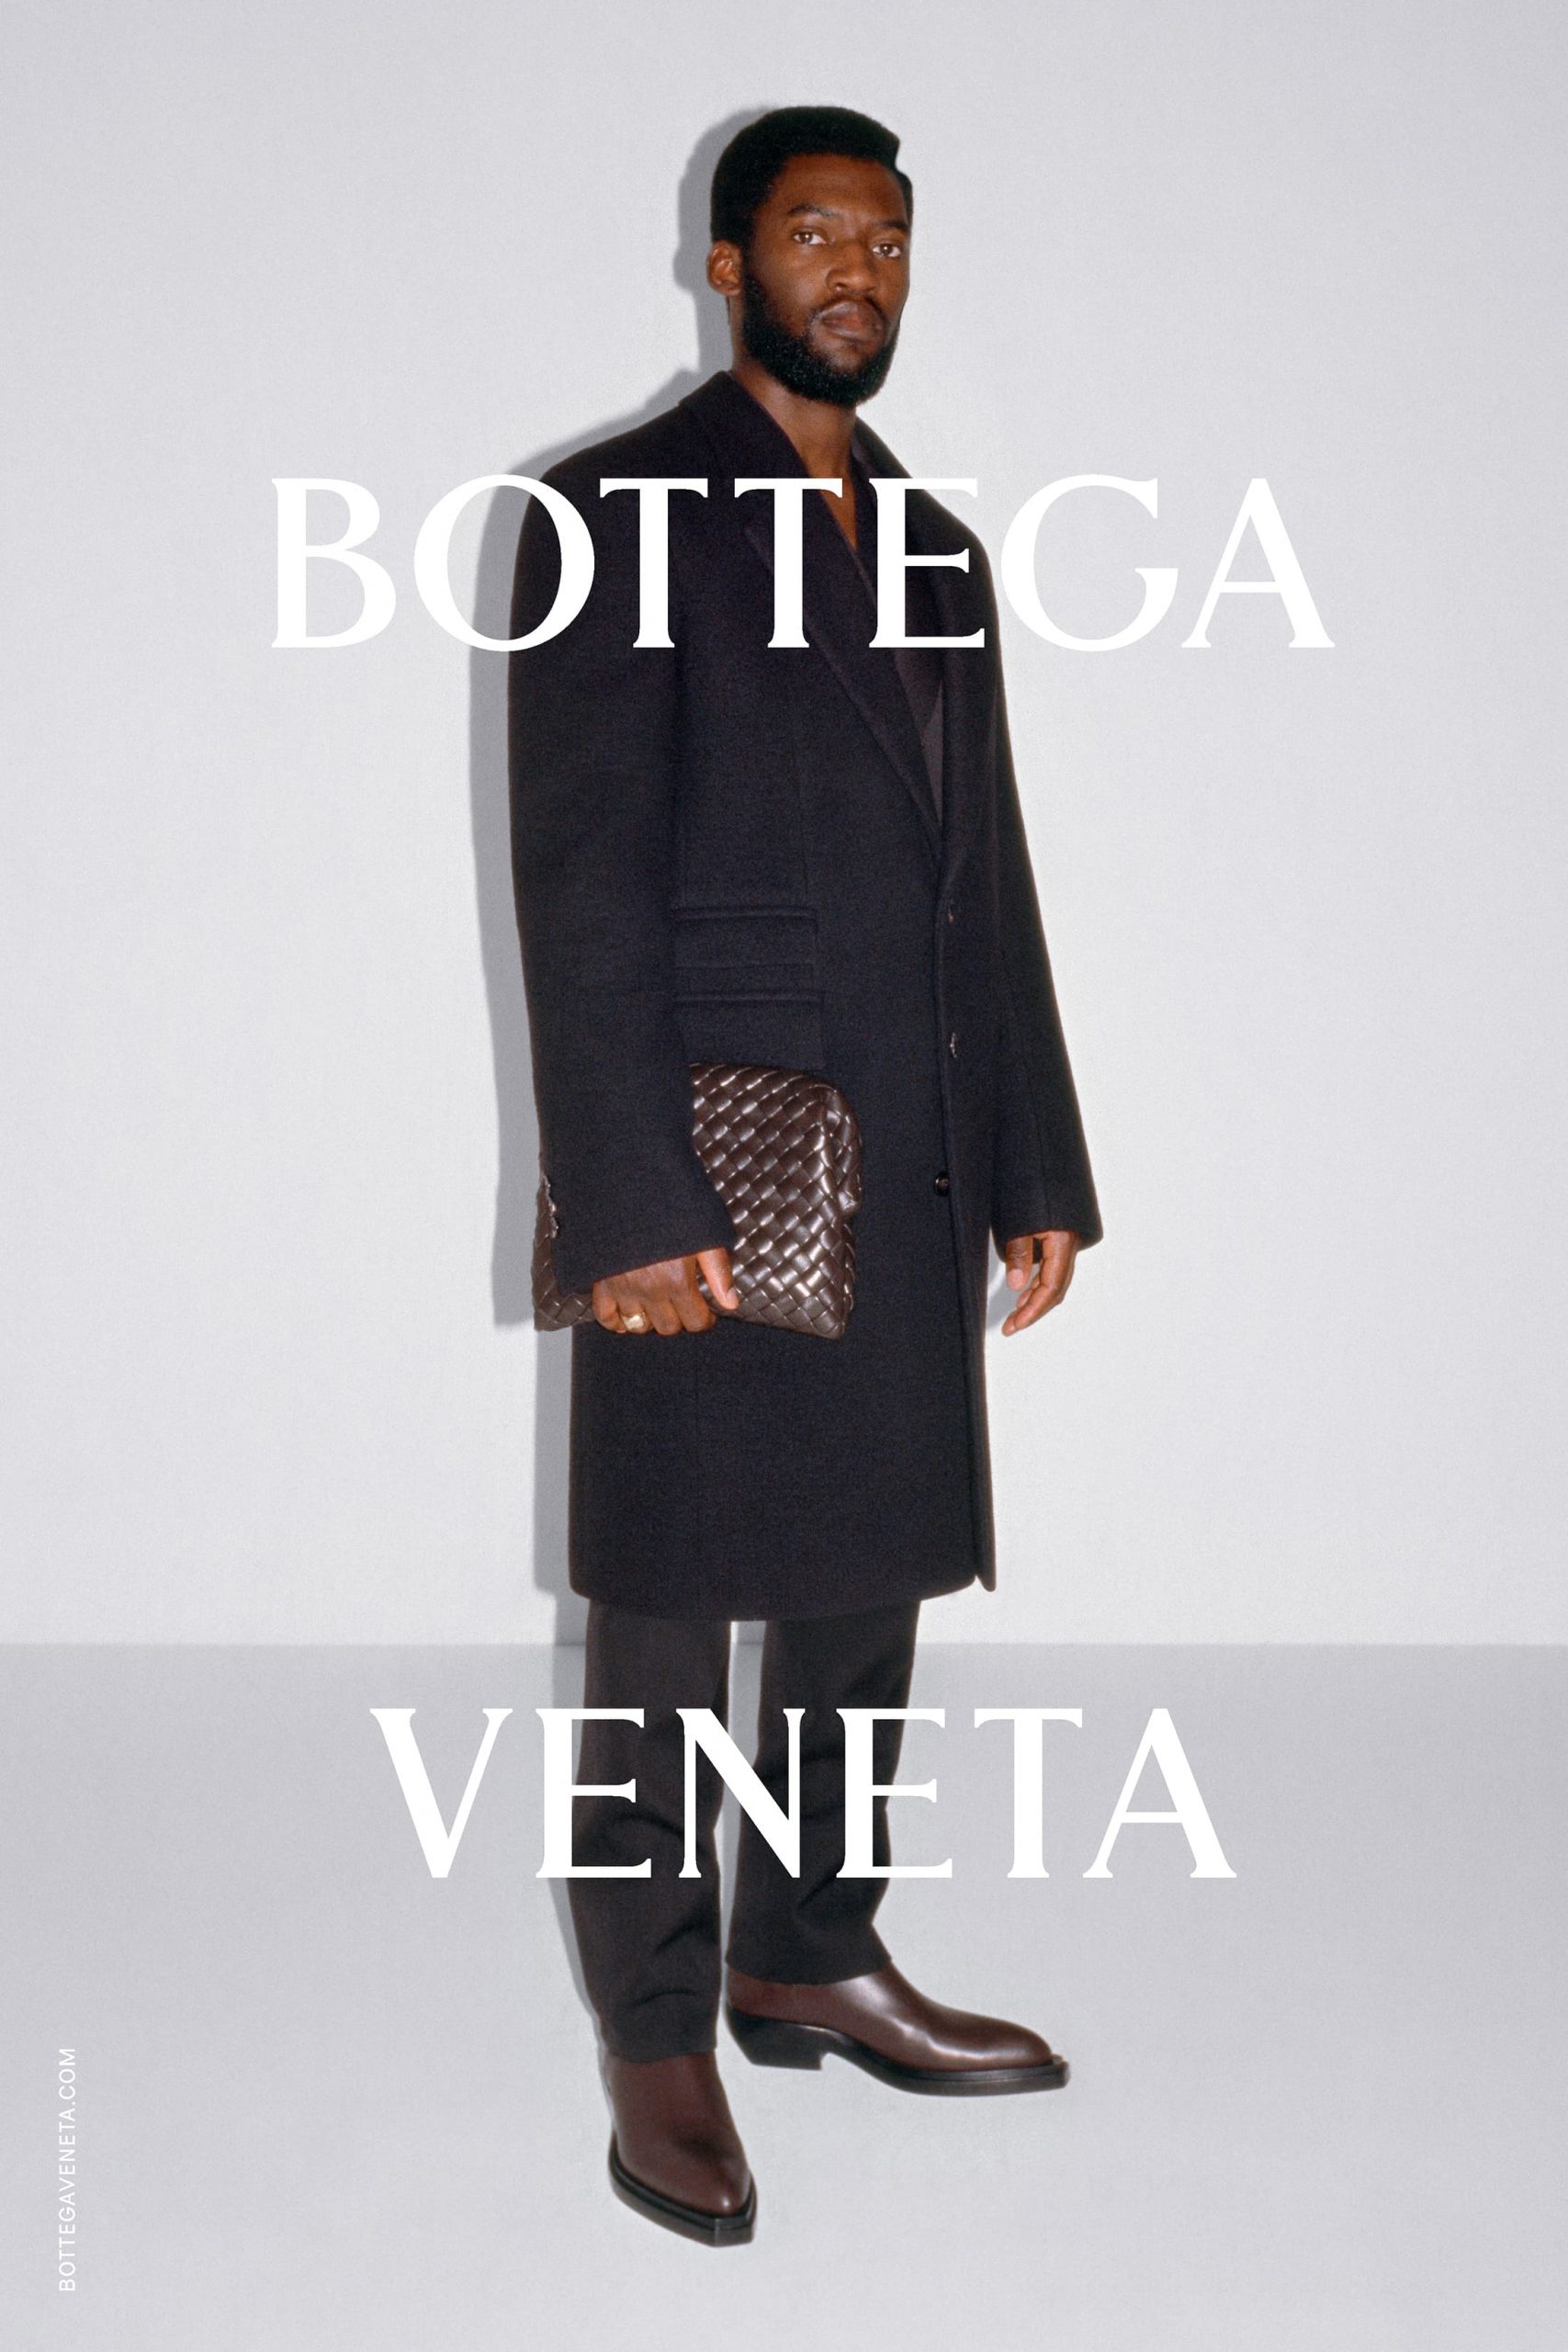 Daniel Lee and filmmaker Tyrone Lebon present Bottega Veneta: Men